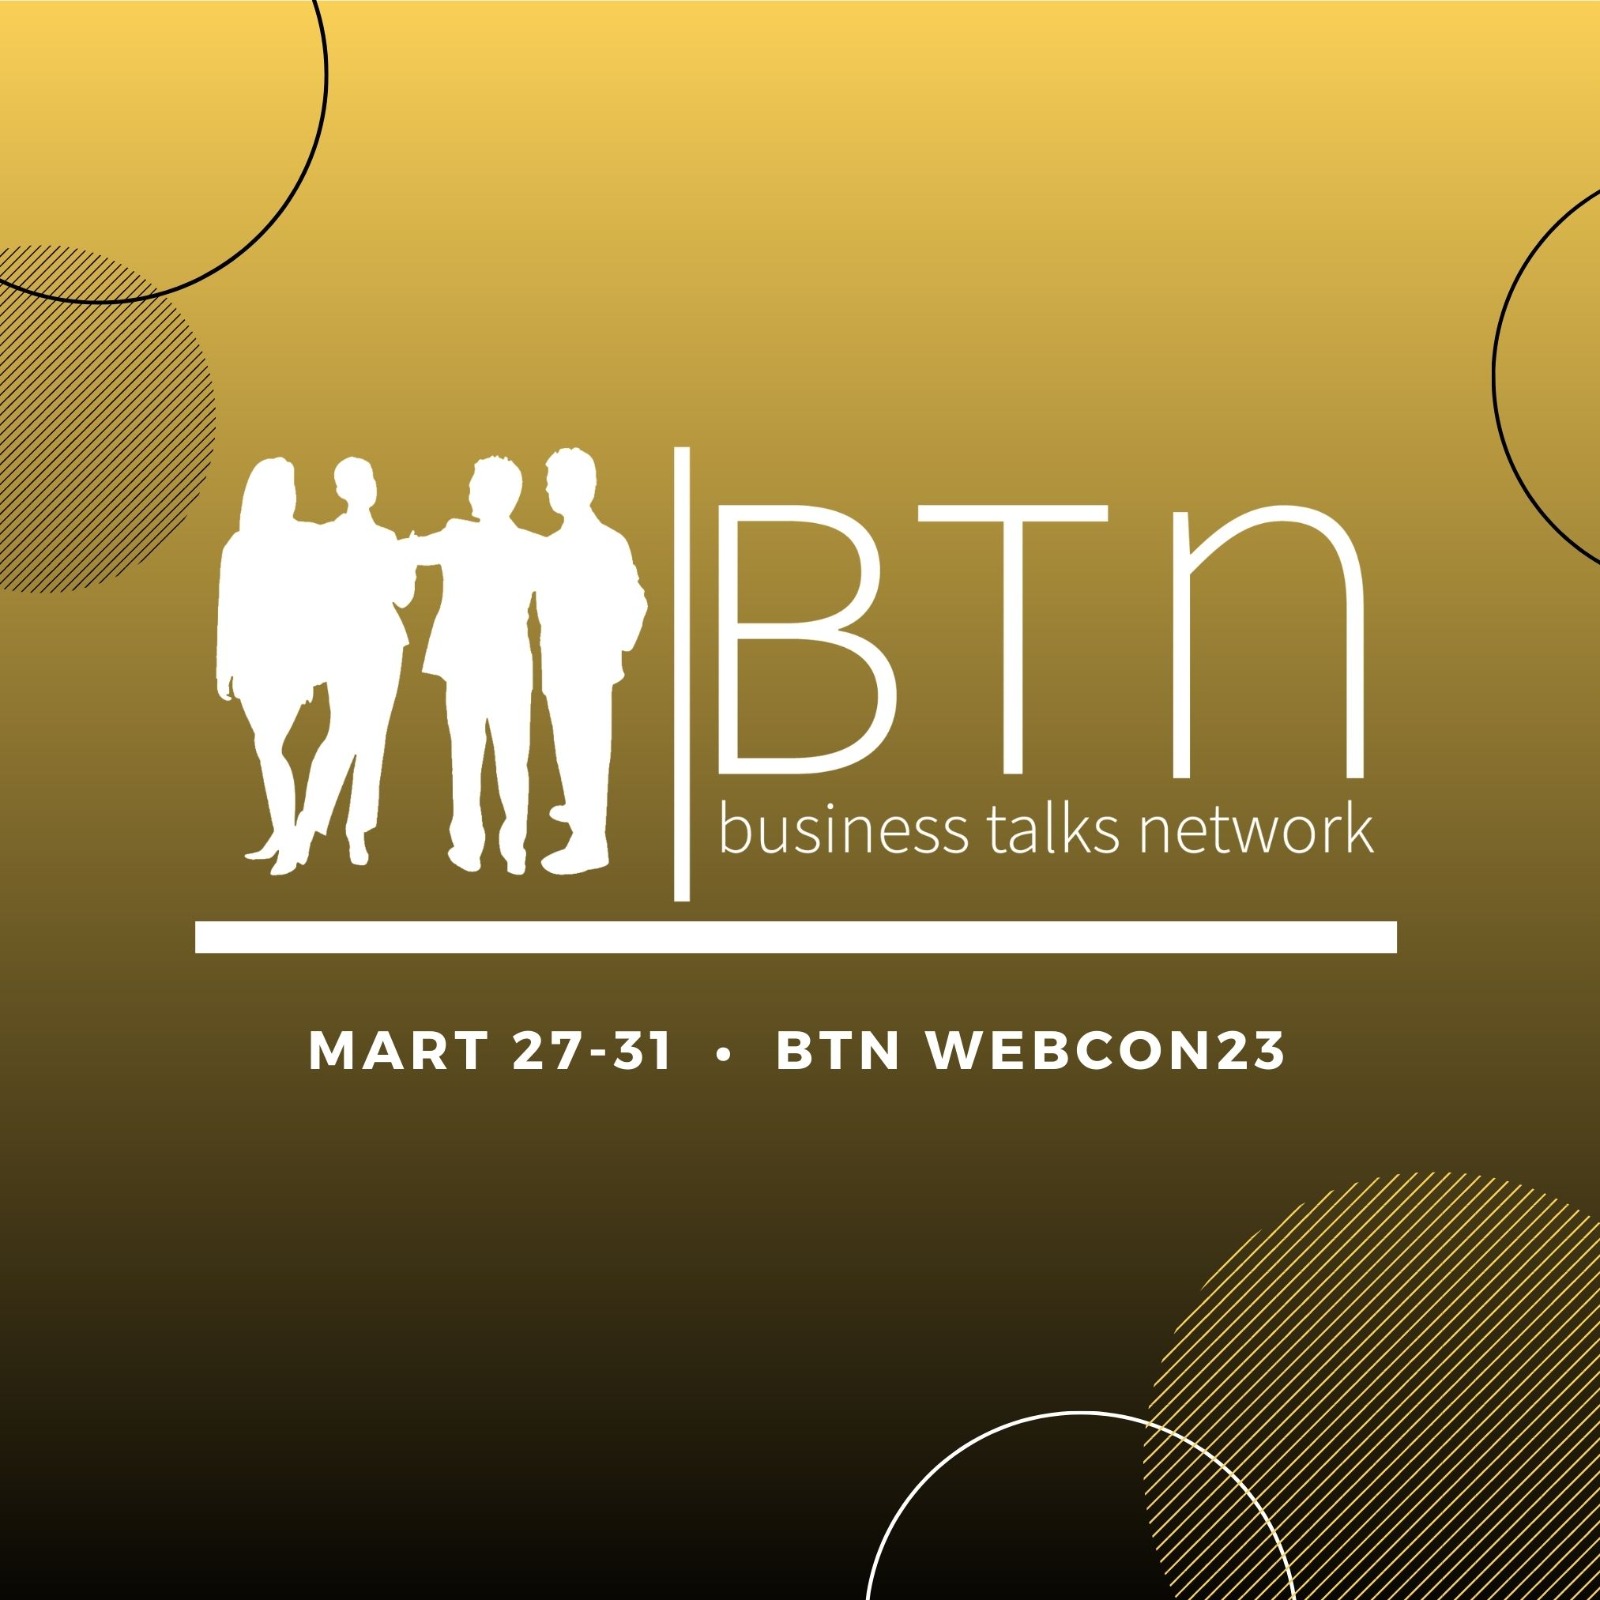 business talks network